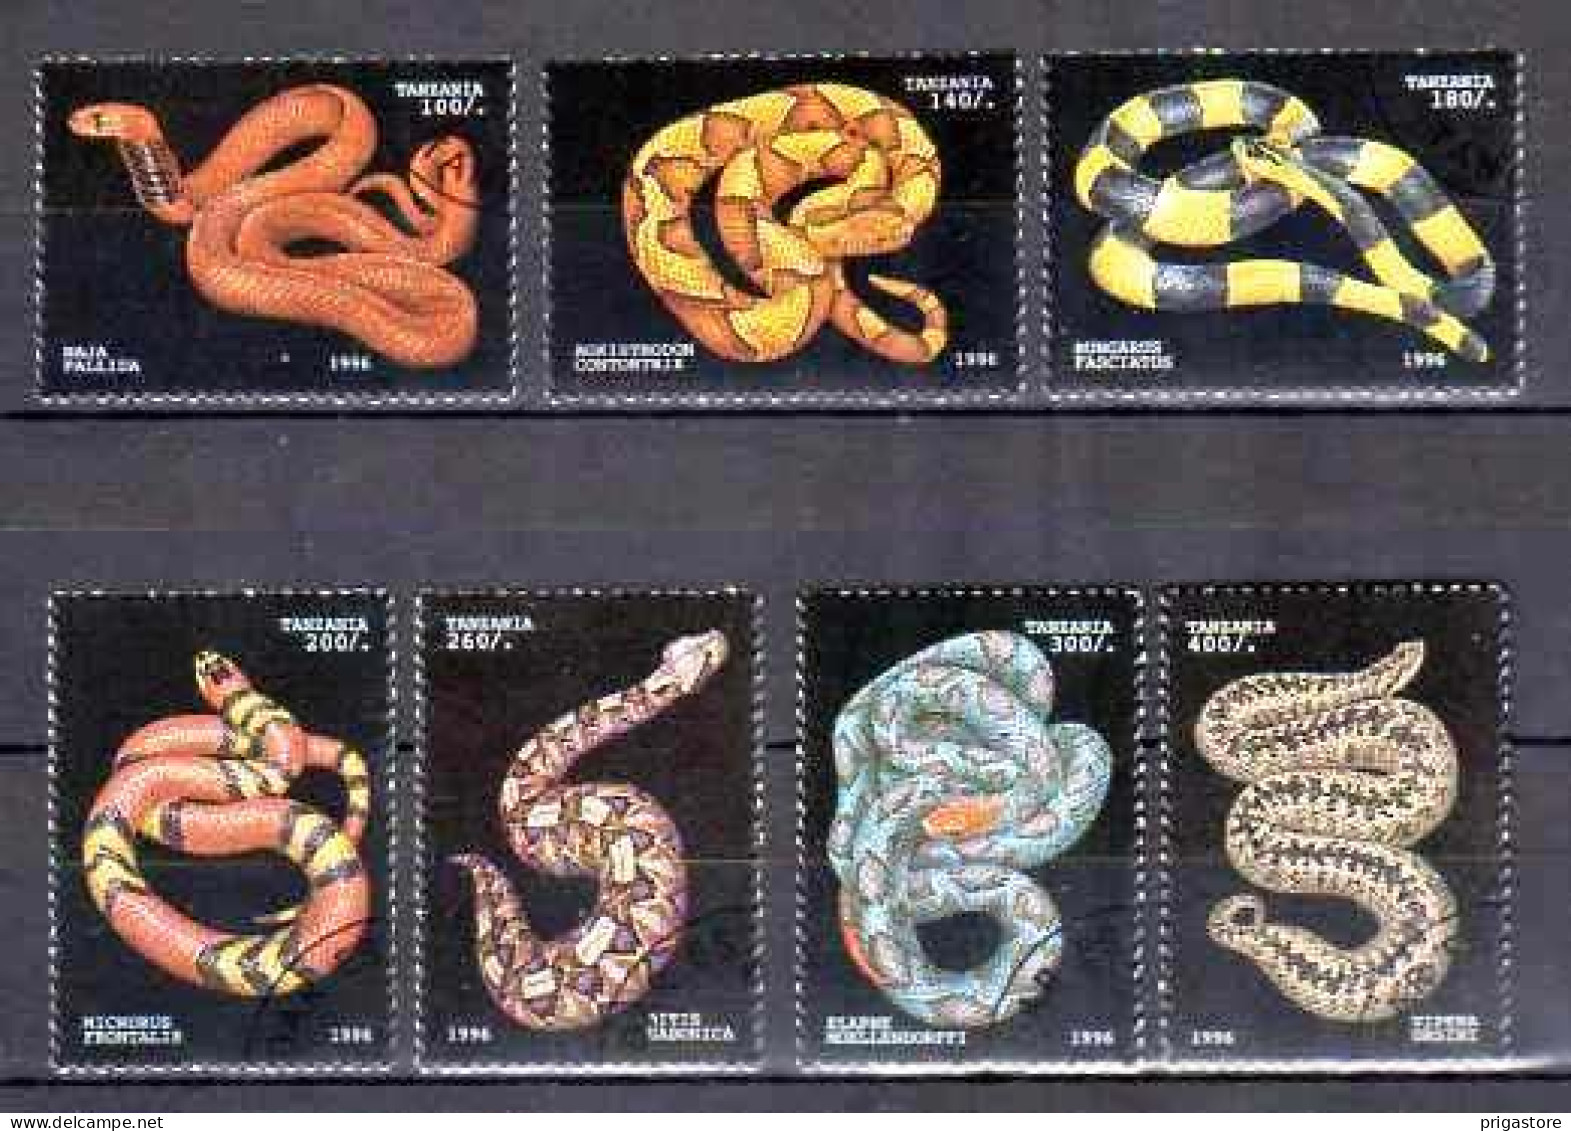 Animaux Serpents Tanzanie 1996 (48) Yvert N° 1969 à 1975 Oblitérés Used - Serpents